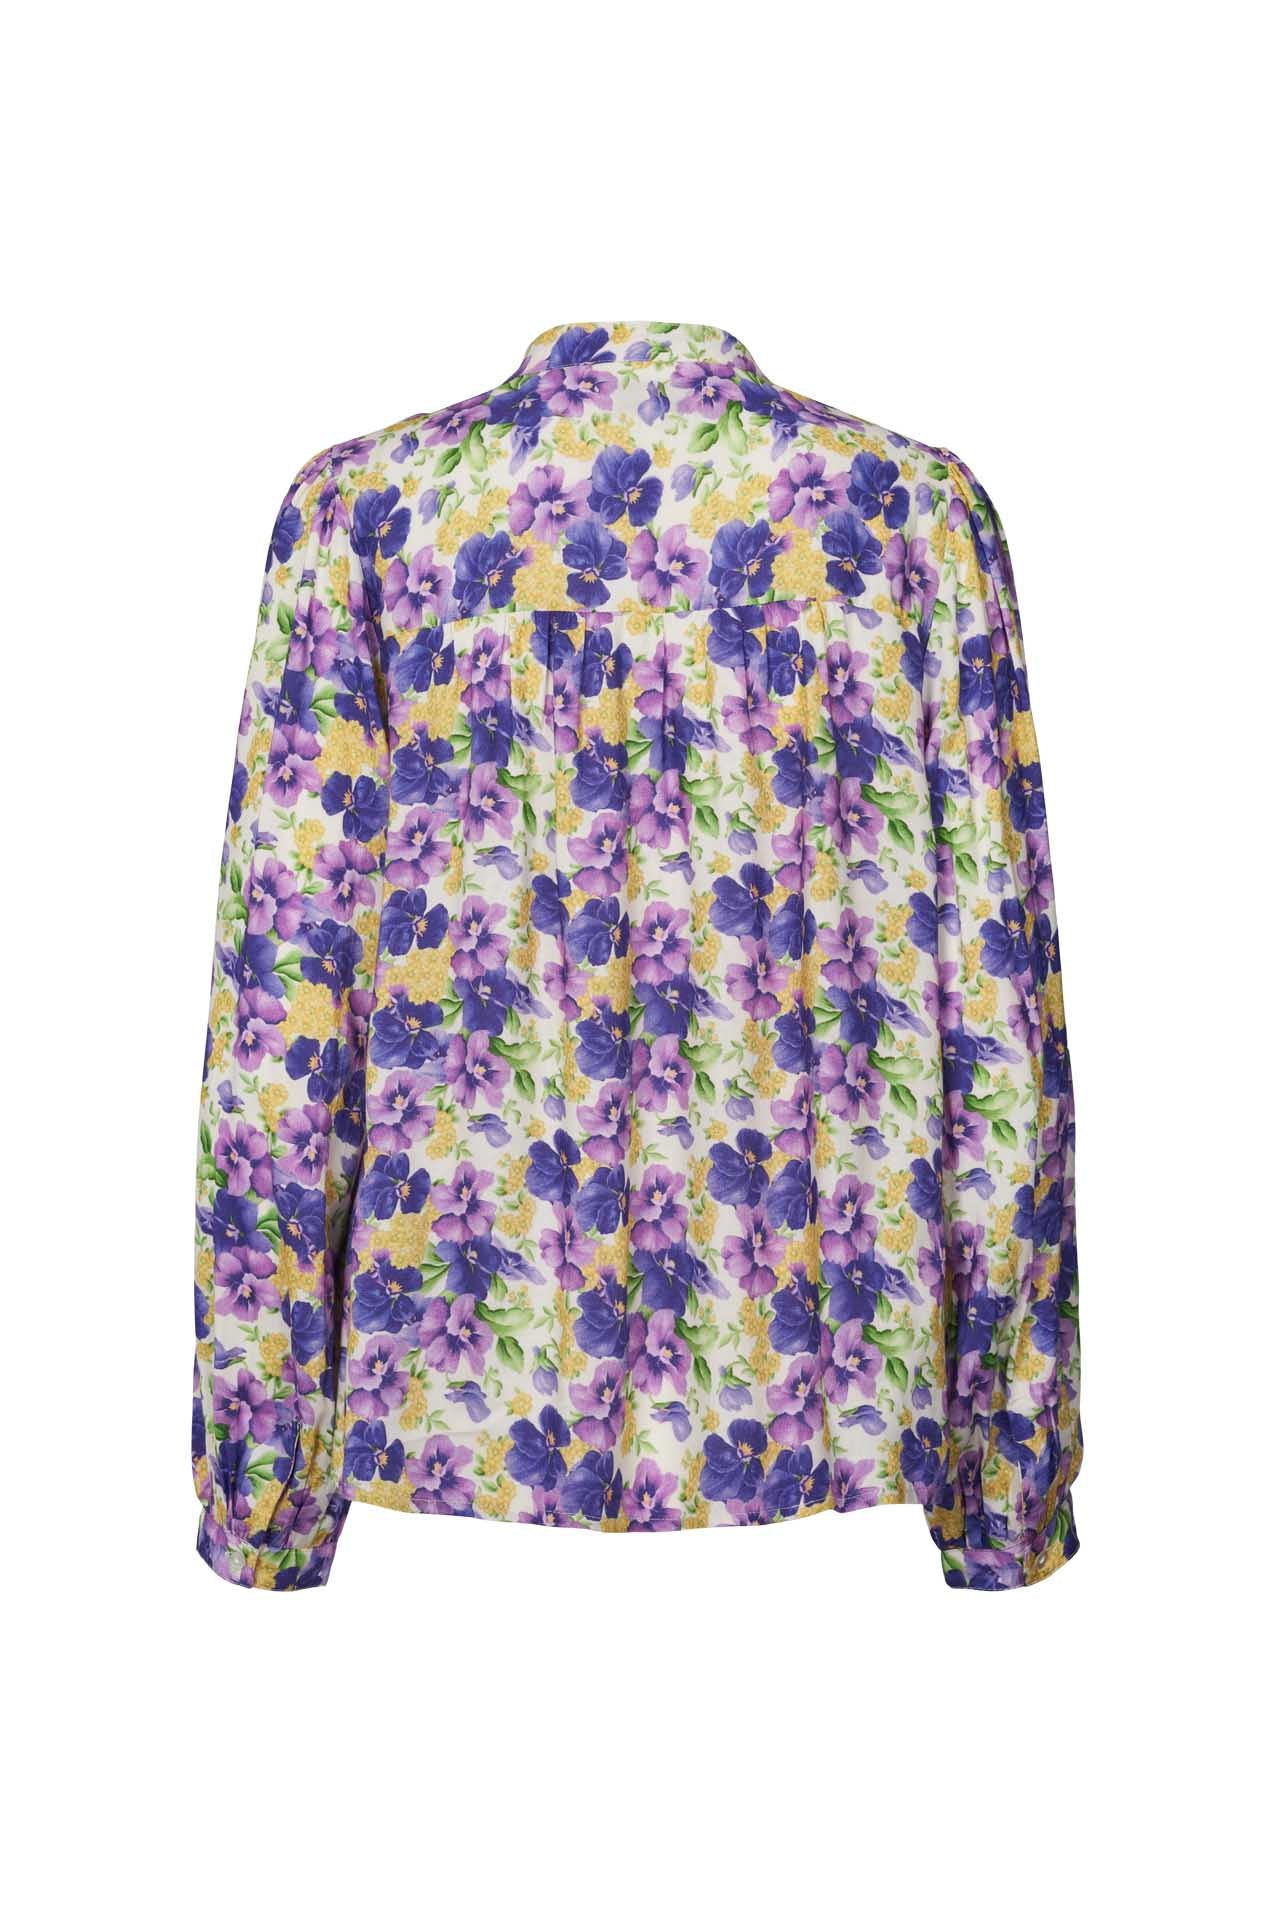 Lollys Laundry Elif Shirt Shirt 74 Flower Print